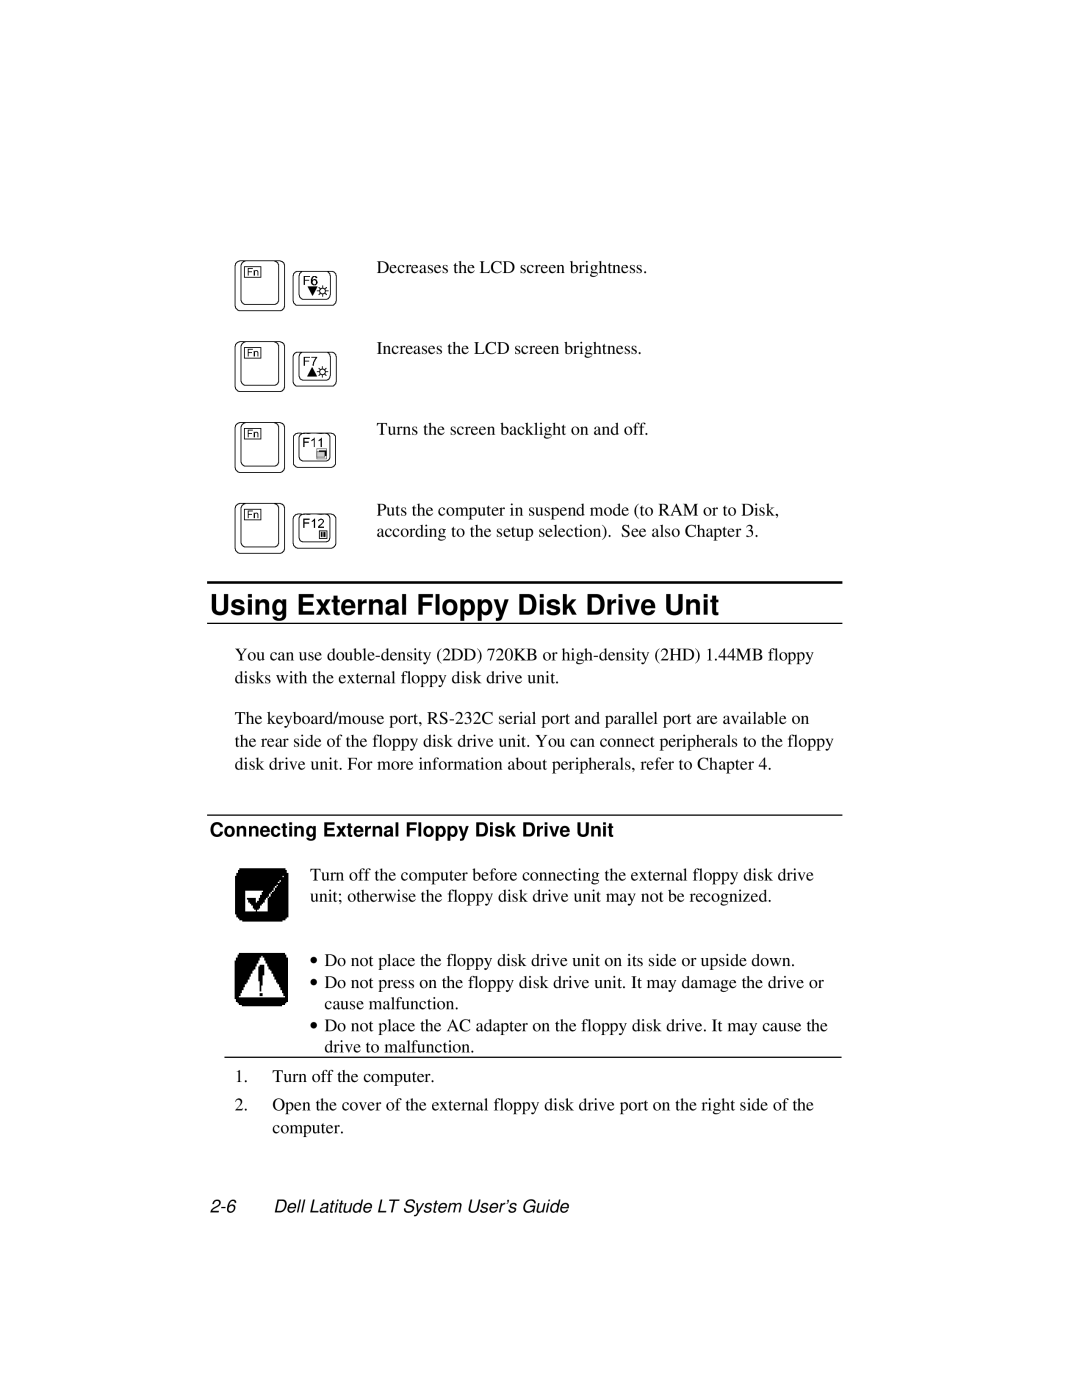 Dell LT System manual Using External Floppy Disk Drive Unit, Connecting External Floppy Disk Drive Unit 